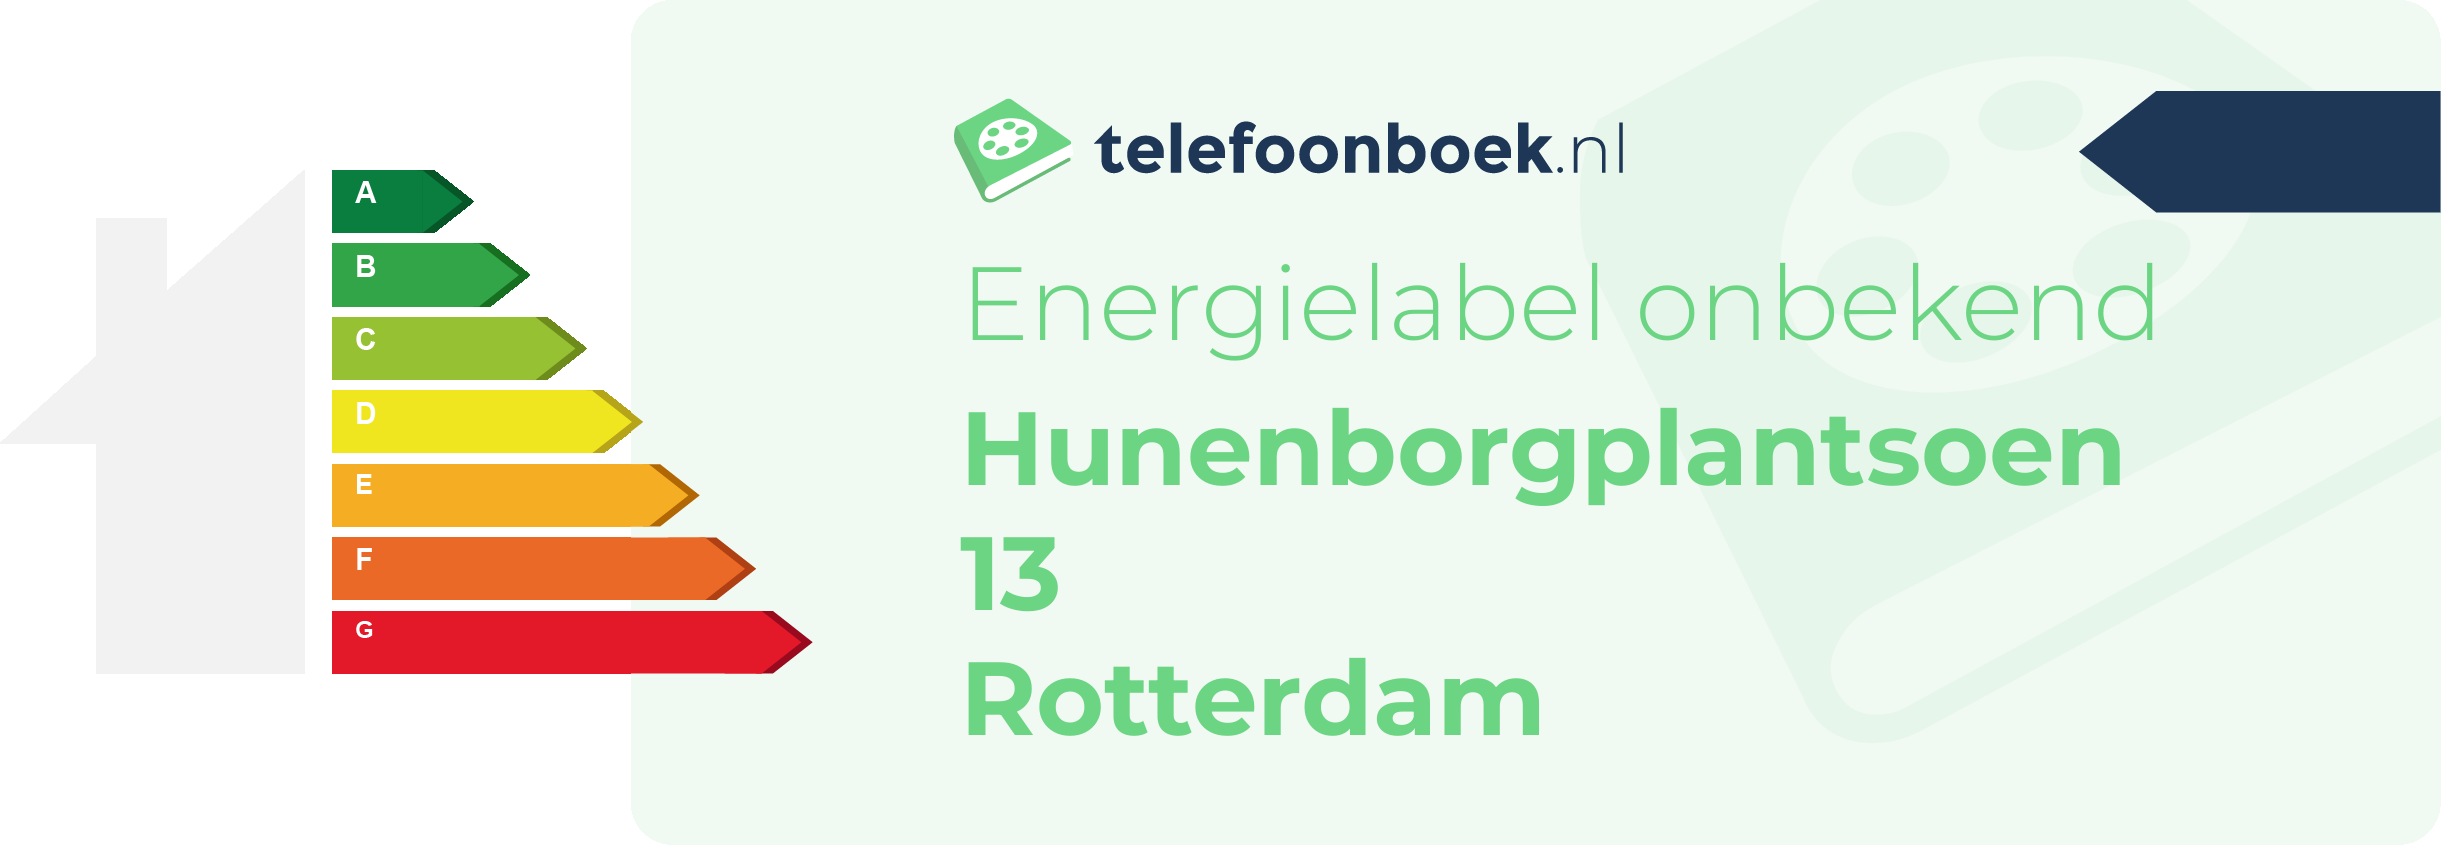 Energielabel Hunenborgplantsoen 13 Rotterdam